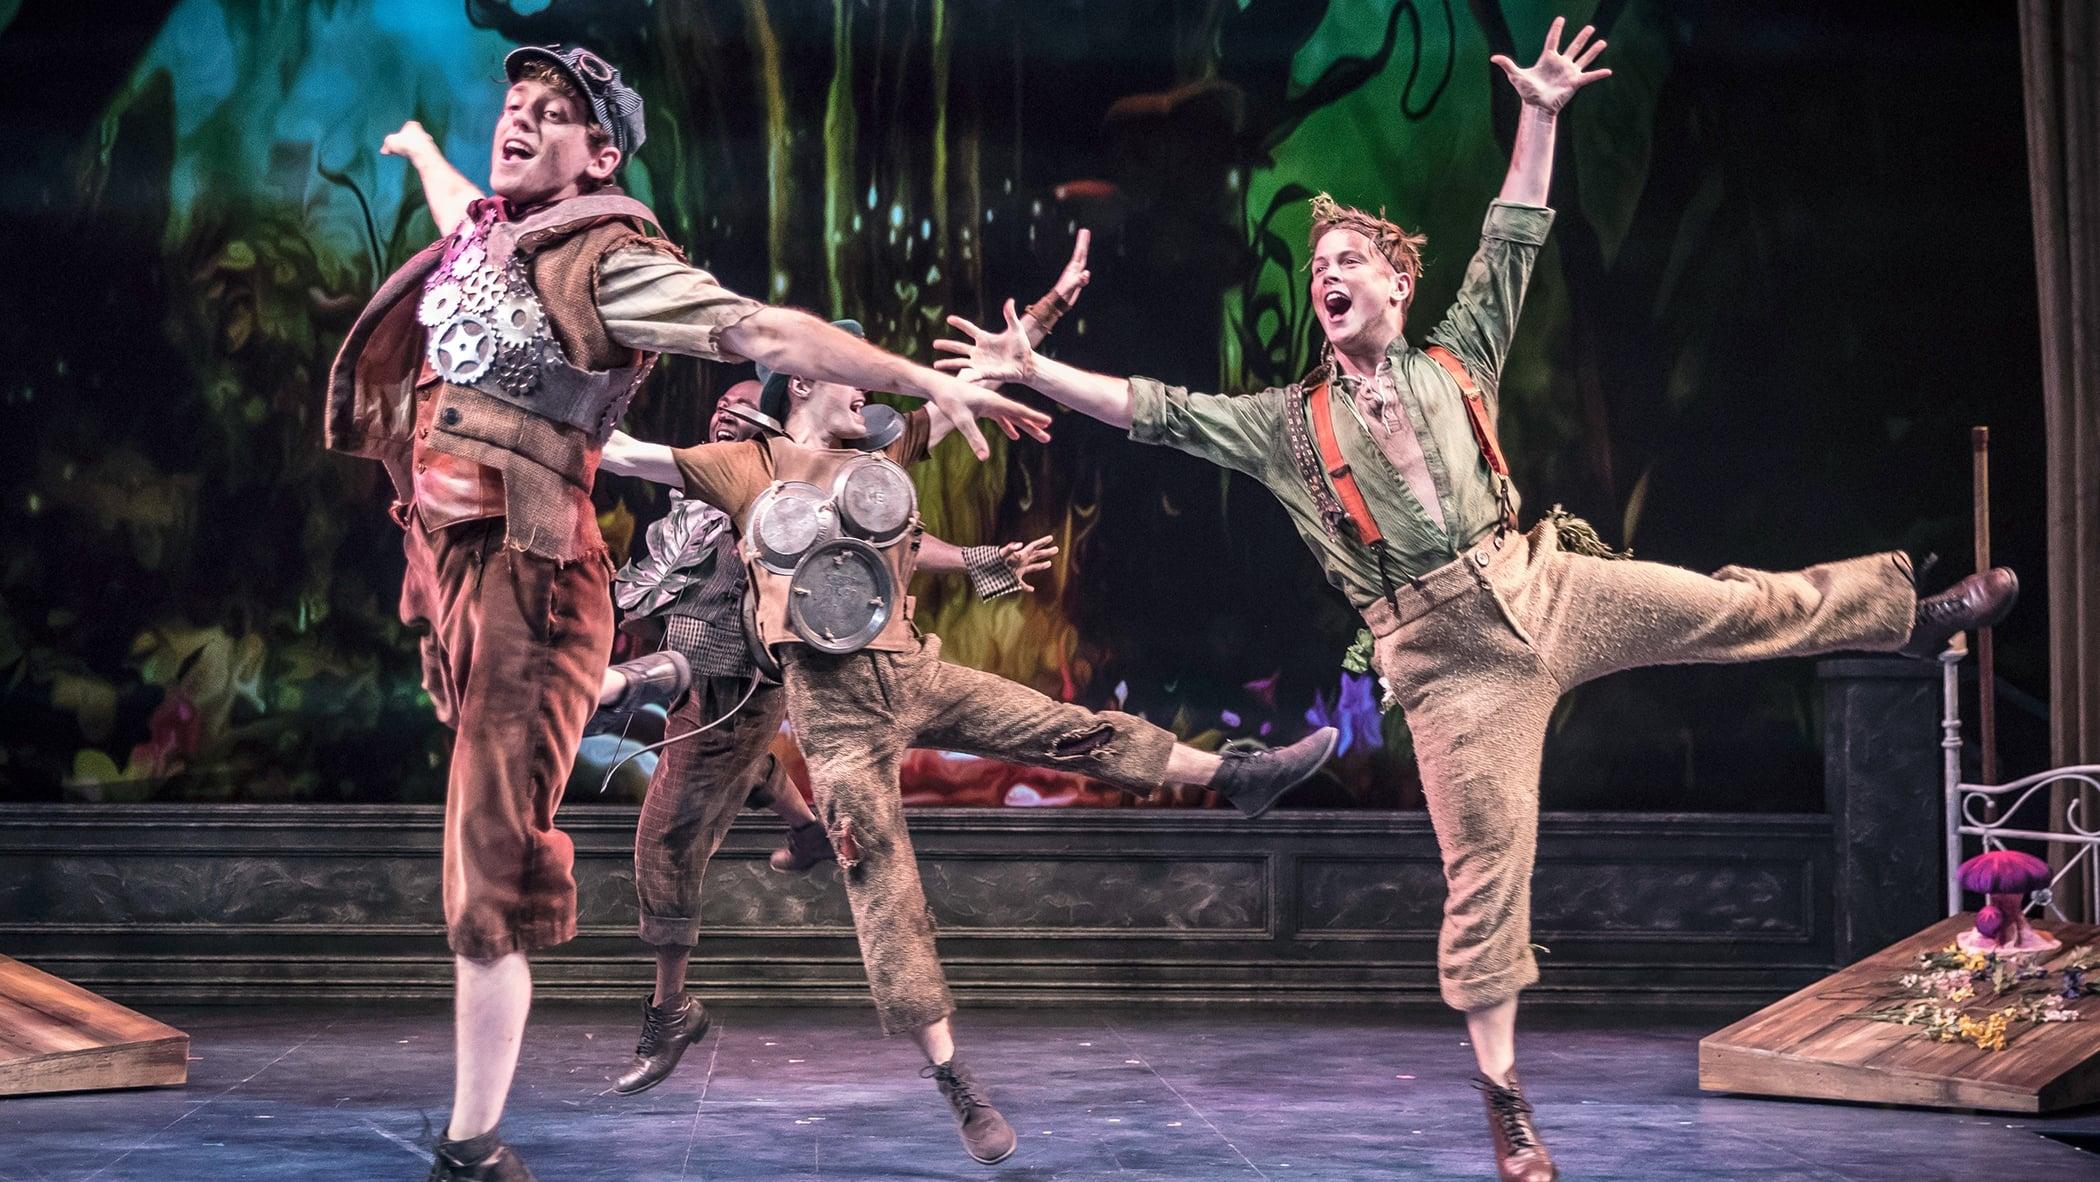 Peter Pan: A Musical Adventure backdrop